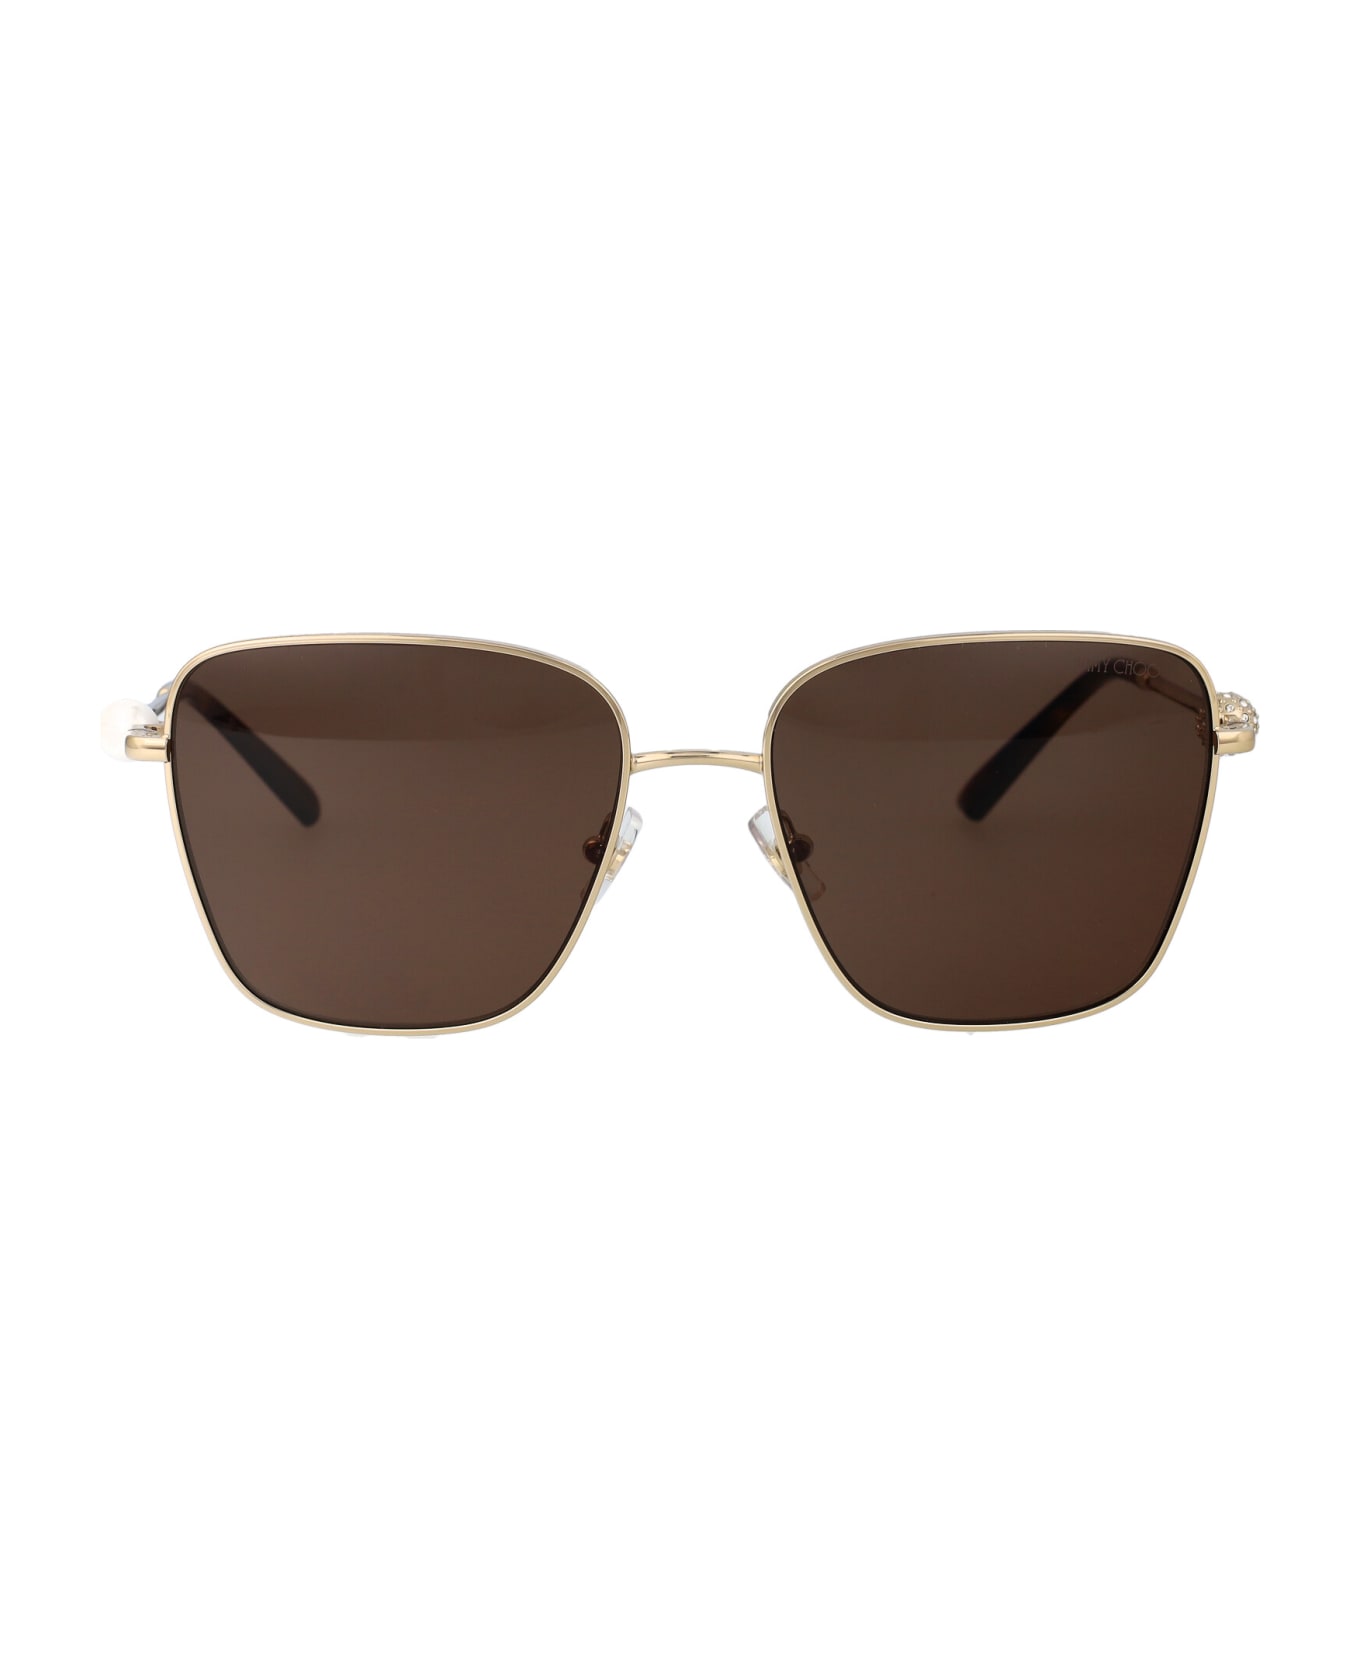 Jimmy Choo Eyewear 0jc4005hb Sunglasses - 300673 Pale Gold